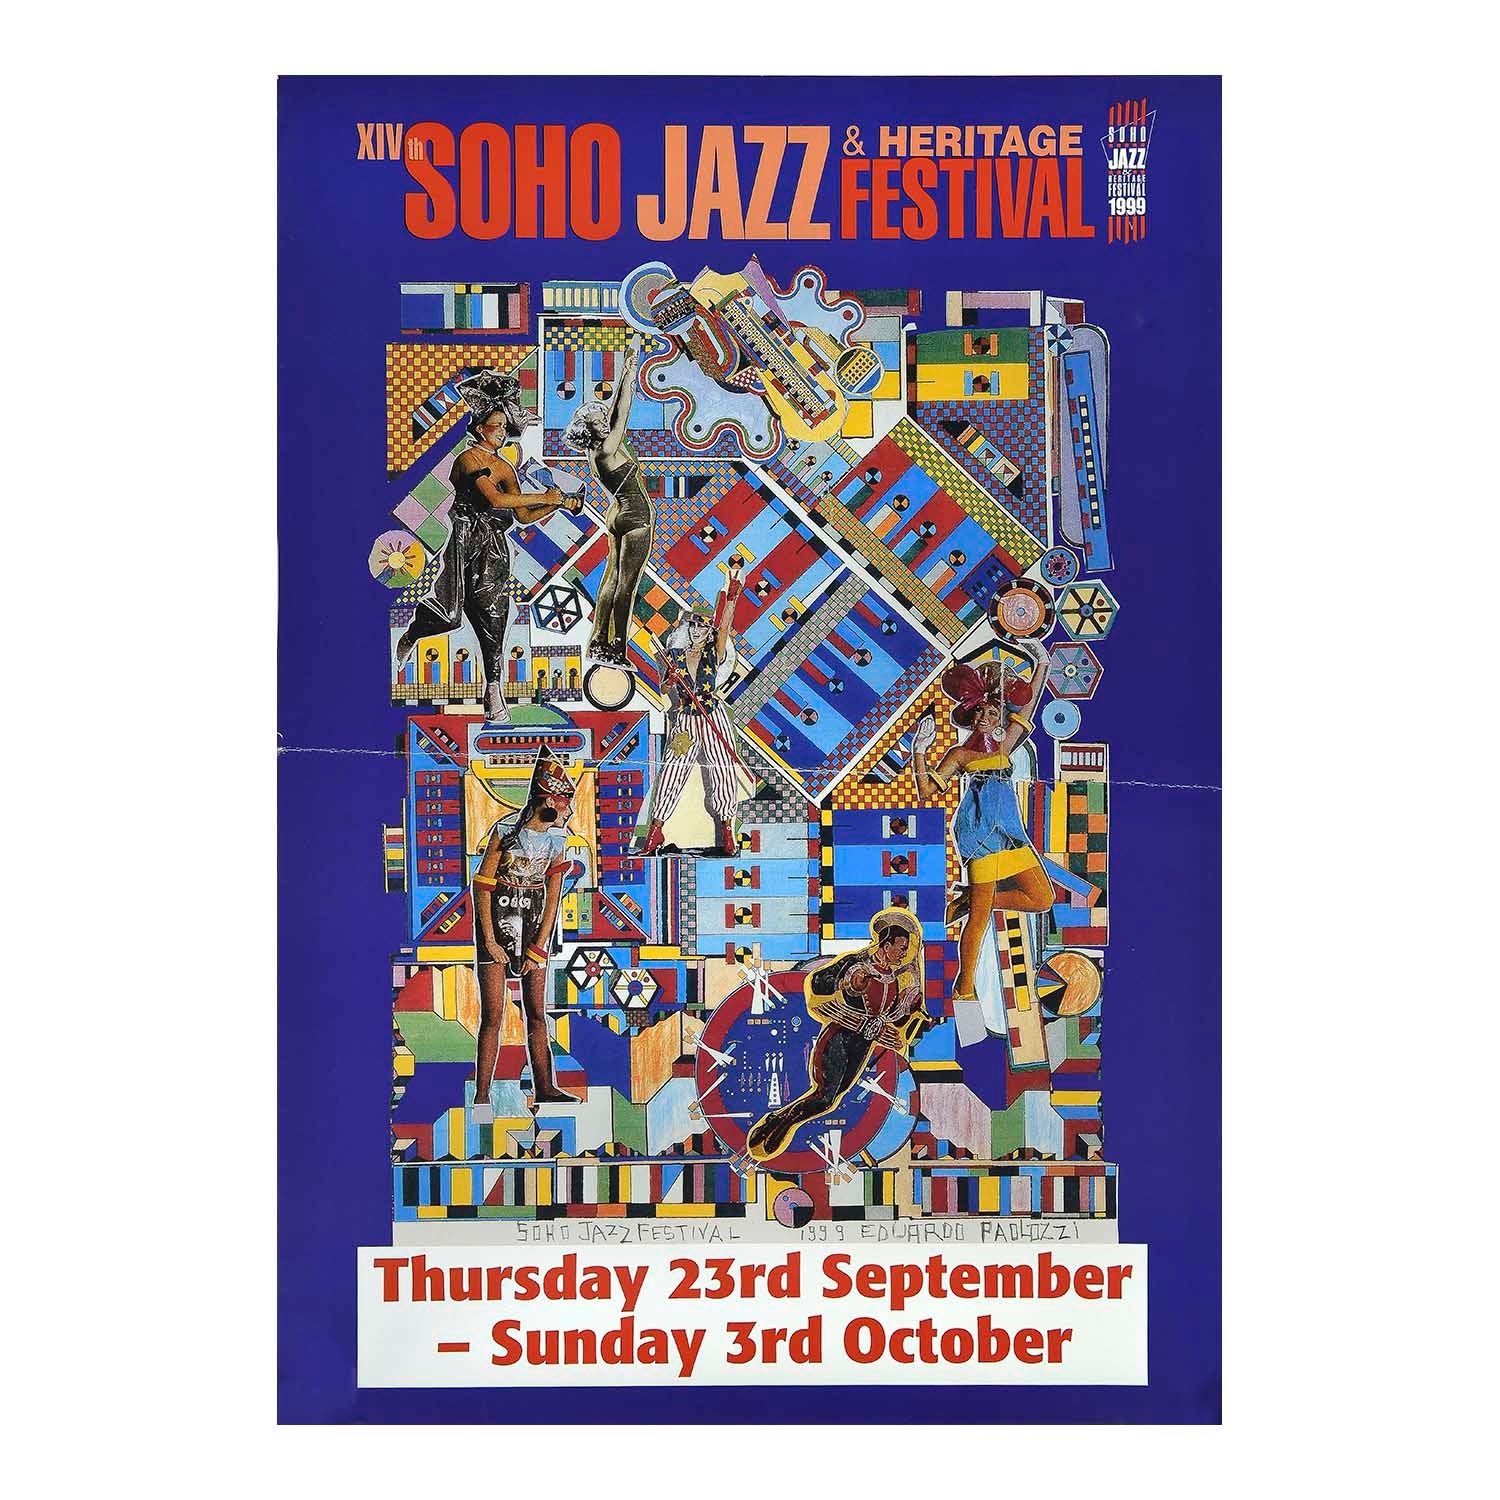 An original poster for the 1999 Soho Jazz Festival designed by the ‘godfather’ of pop art, Eduardo Paolozzi